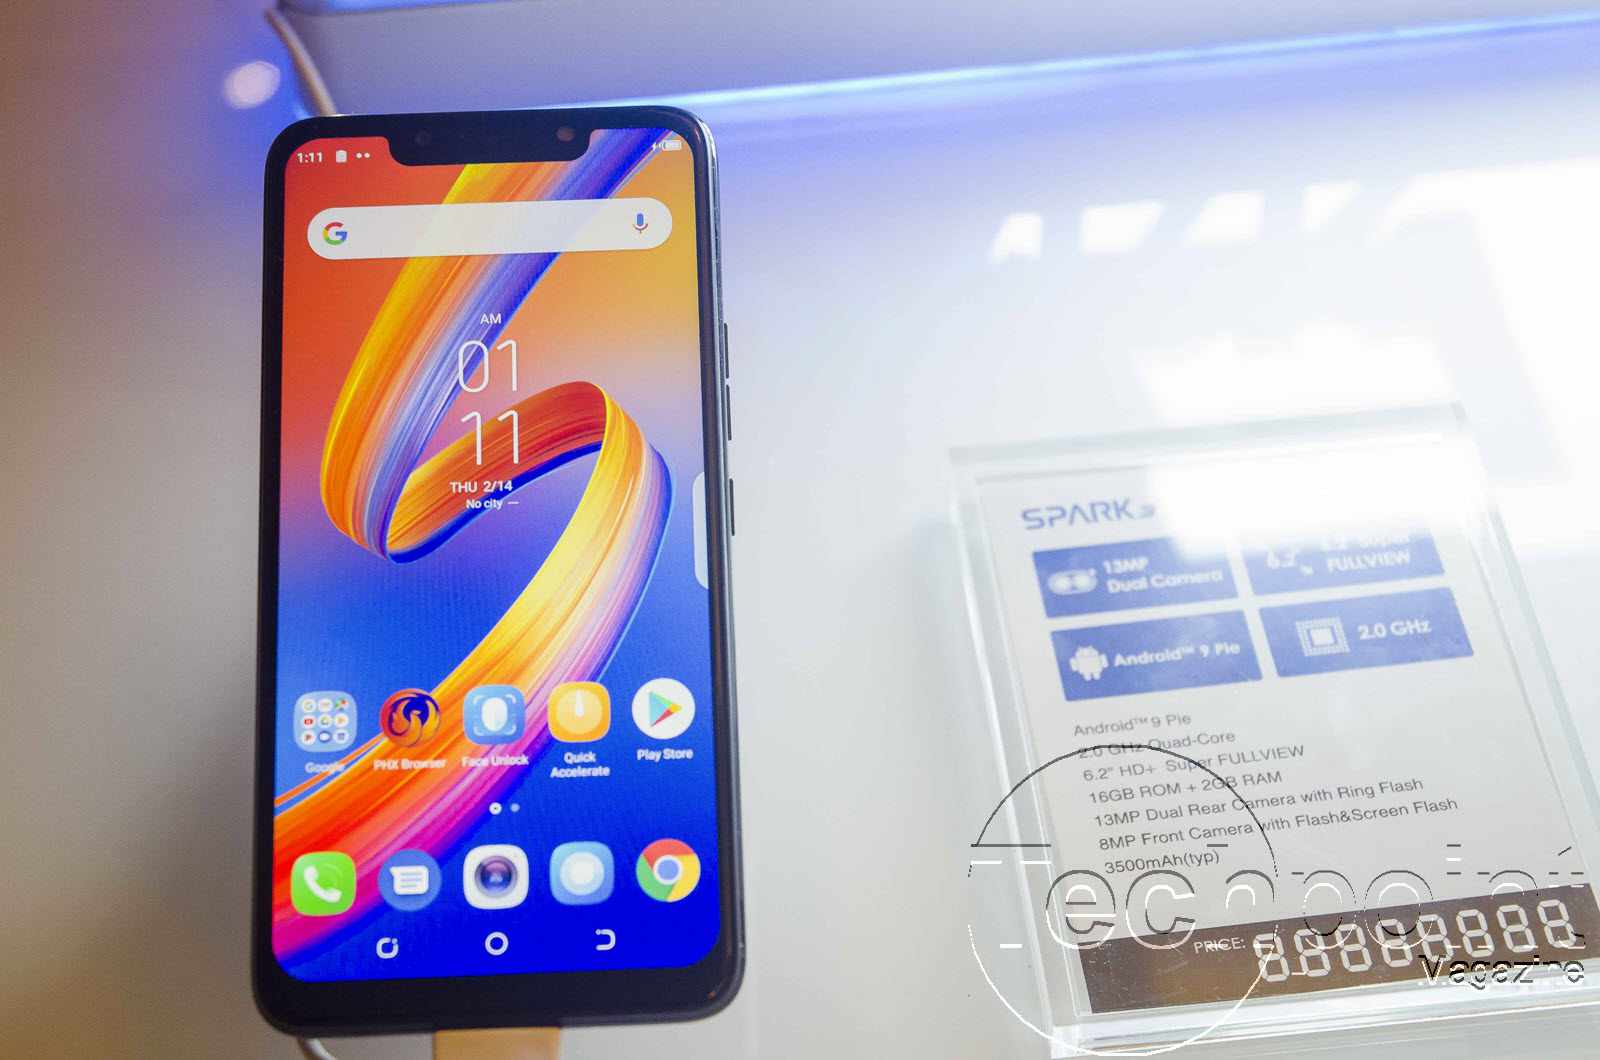 tecno spark 3 smartphone price after launch in uganda